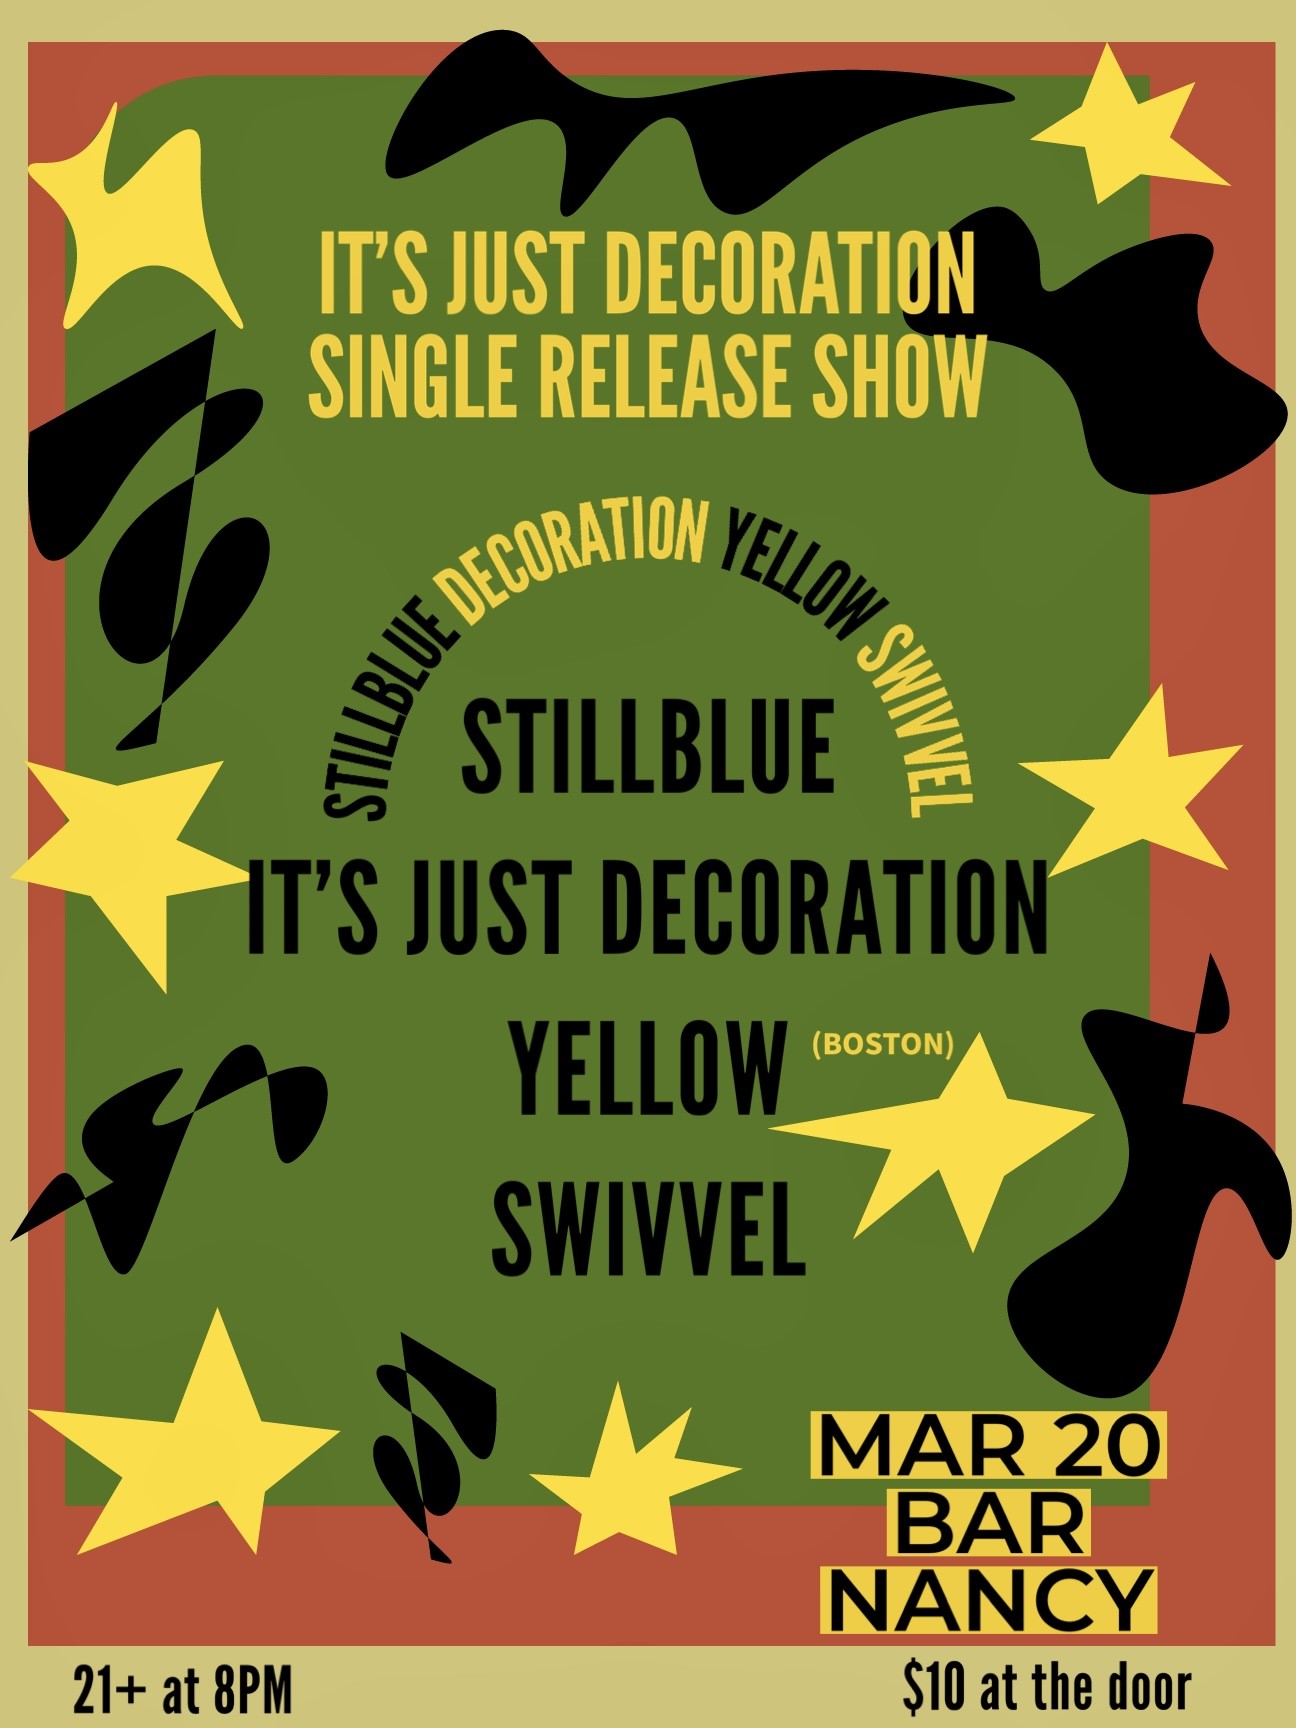 STILLBLUE. - ITS JUST DECORATION. - YELLOW. - SWIVVEL AT BAR NANCY